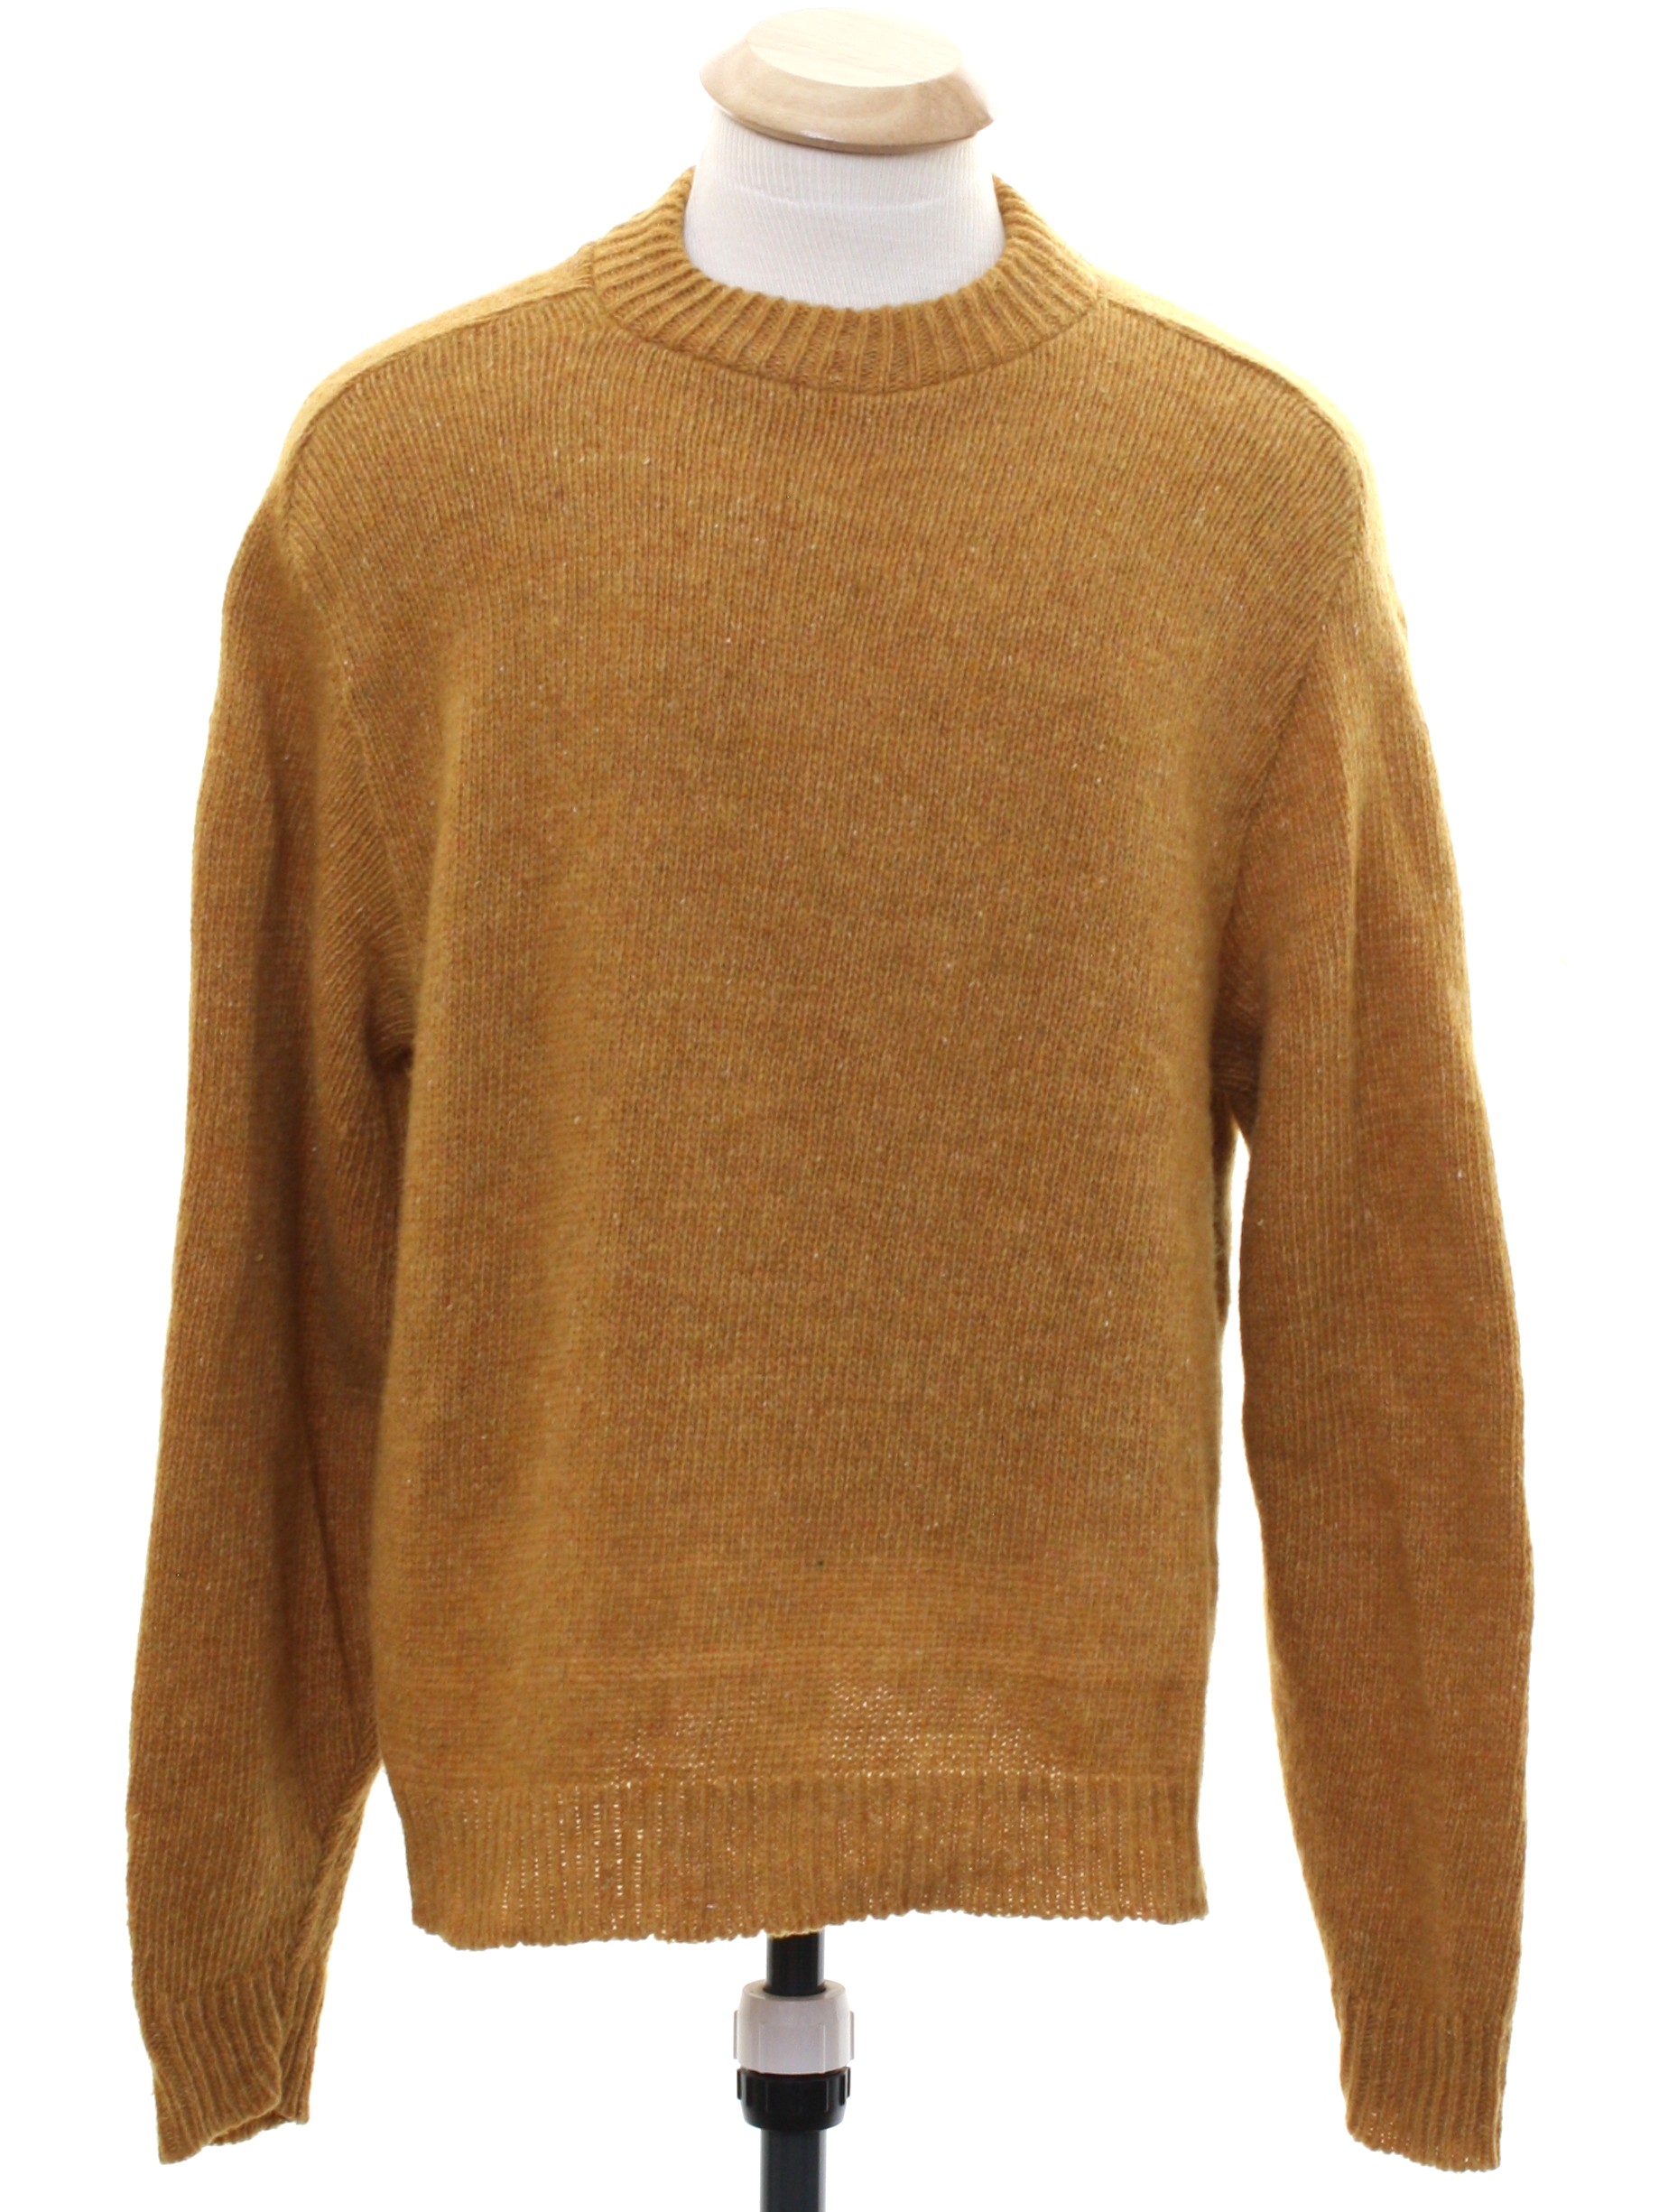 Vintage 60s Sweater: Early 60s -Dagar- Unisex mottled golden tan ...